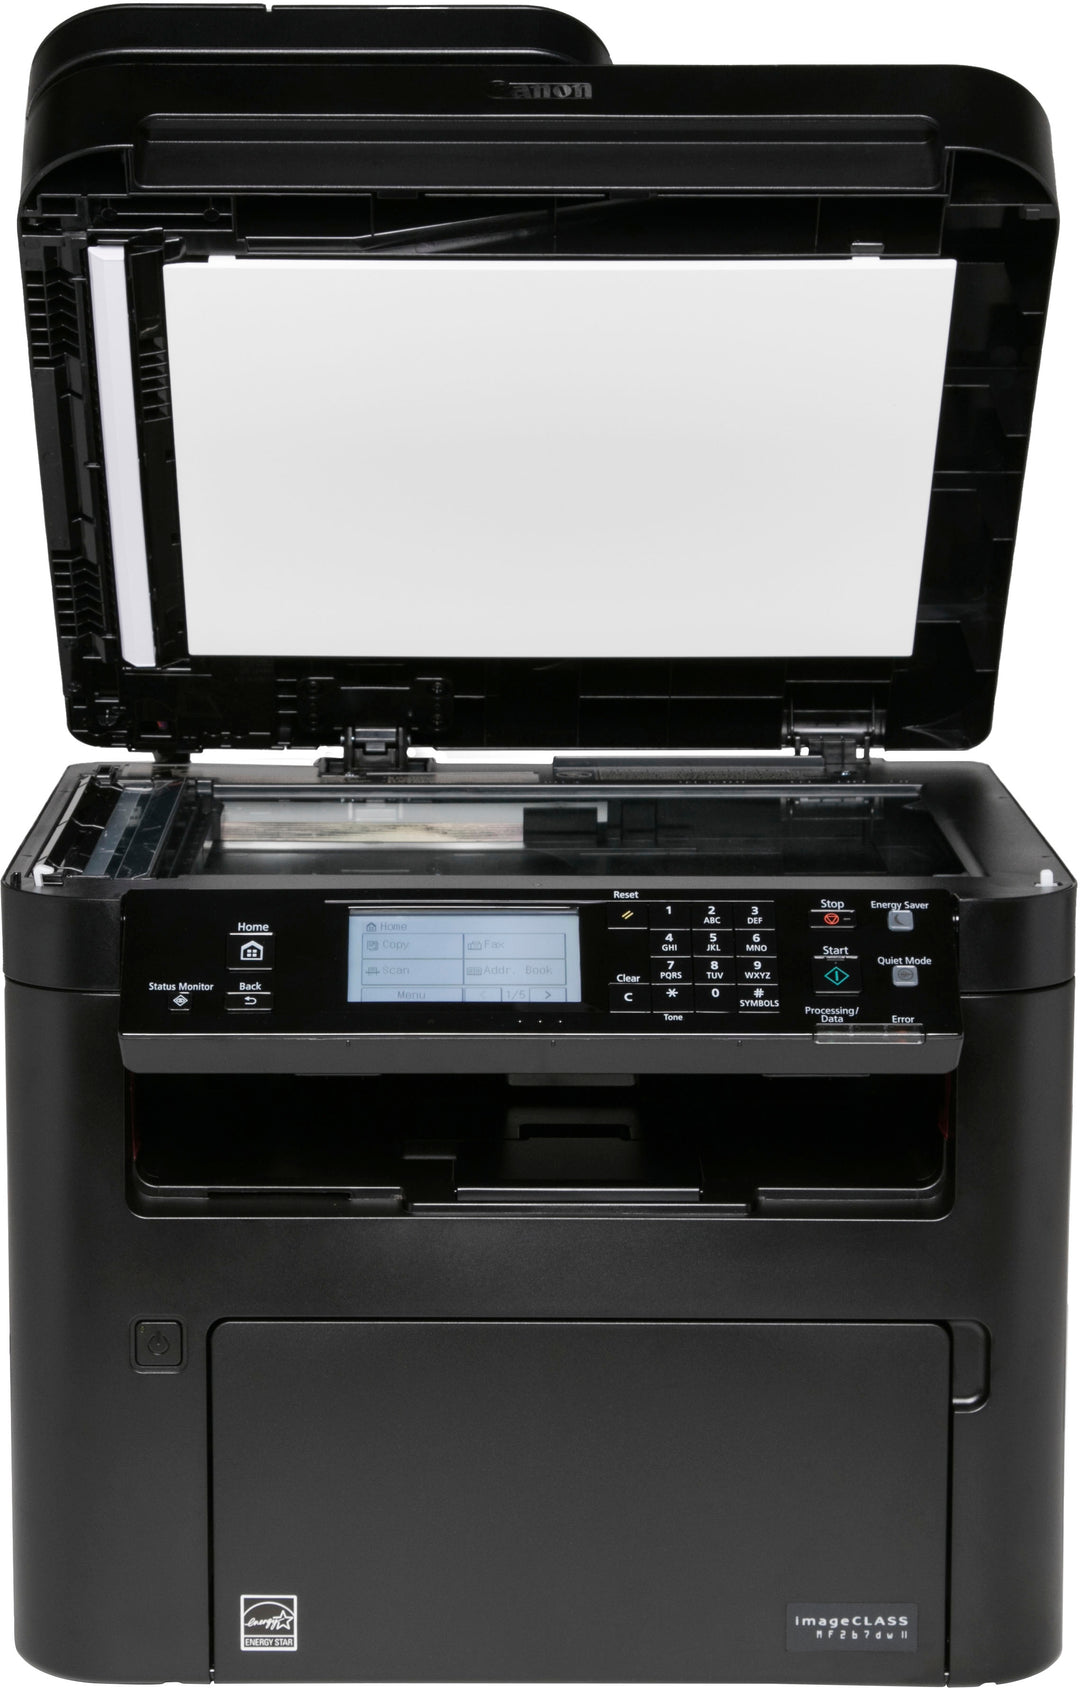 Canon - imageCLASS MF267dw II Wireless Black-and-White All-In-One Laser Printer - Black_20